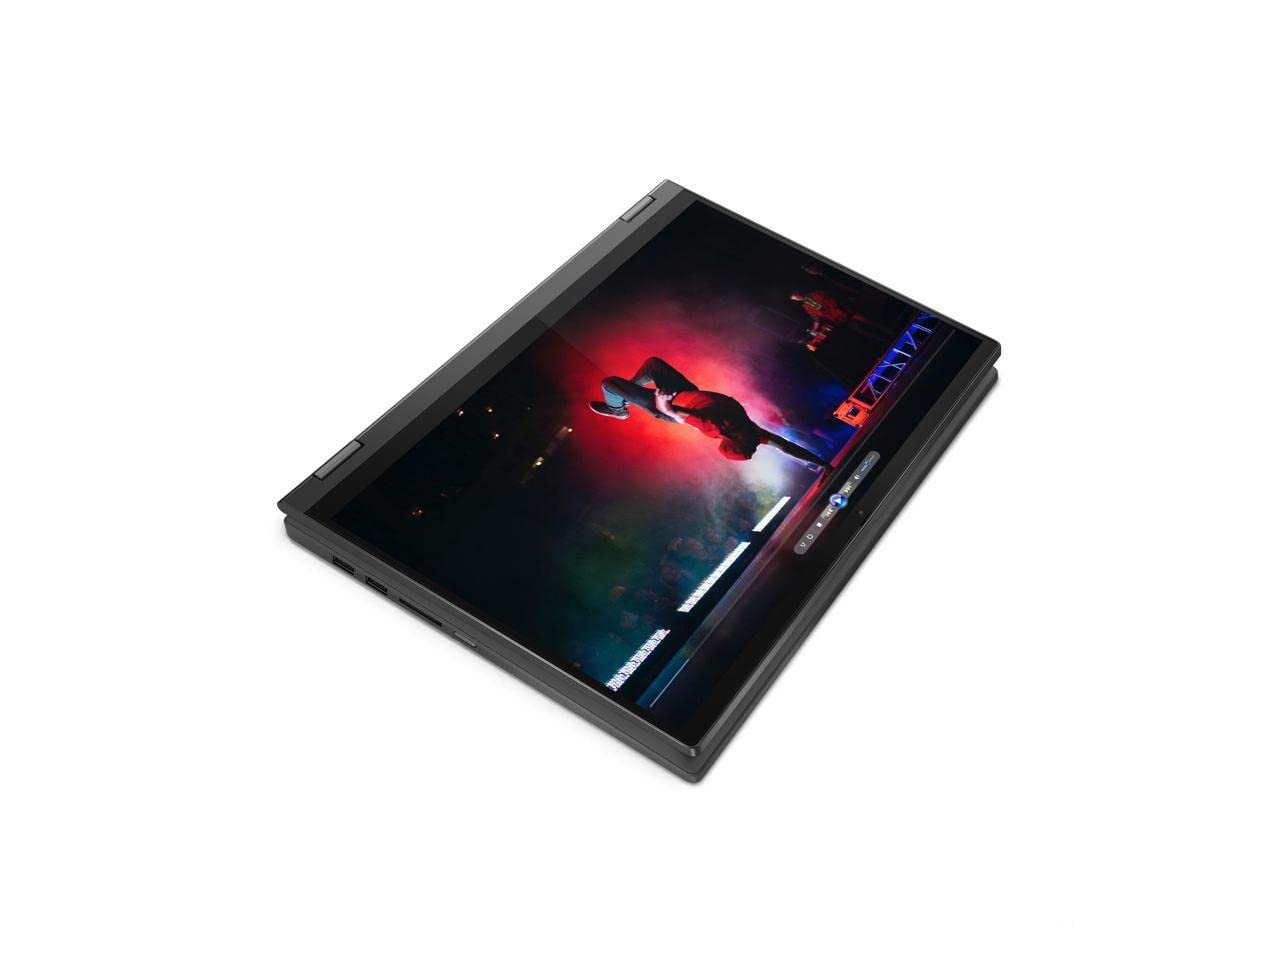 2022 LENOVO IdeaPad Flex 5 15.6" Touchscreen 2-in-1 Laptop AMD Ryzen 5 5500U 6 Cores 8GB DDR4 1TB NVMe SSD Radeon Graphics HDMI USB-C Fingerprint Backlit Keyboard Windows 11 w/ 32GB USB